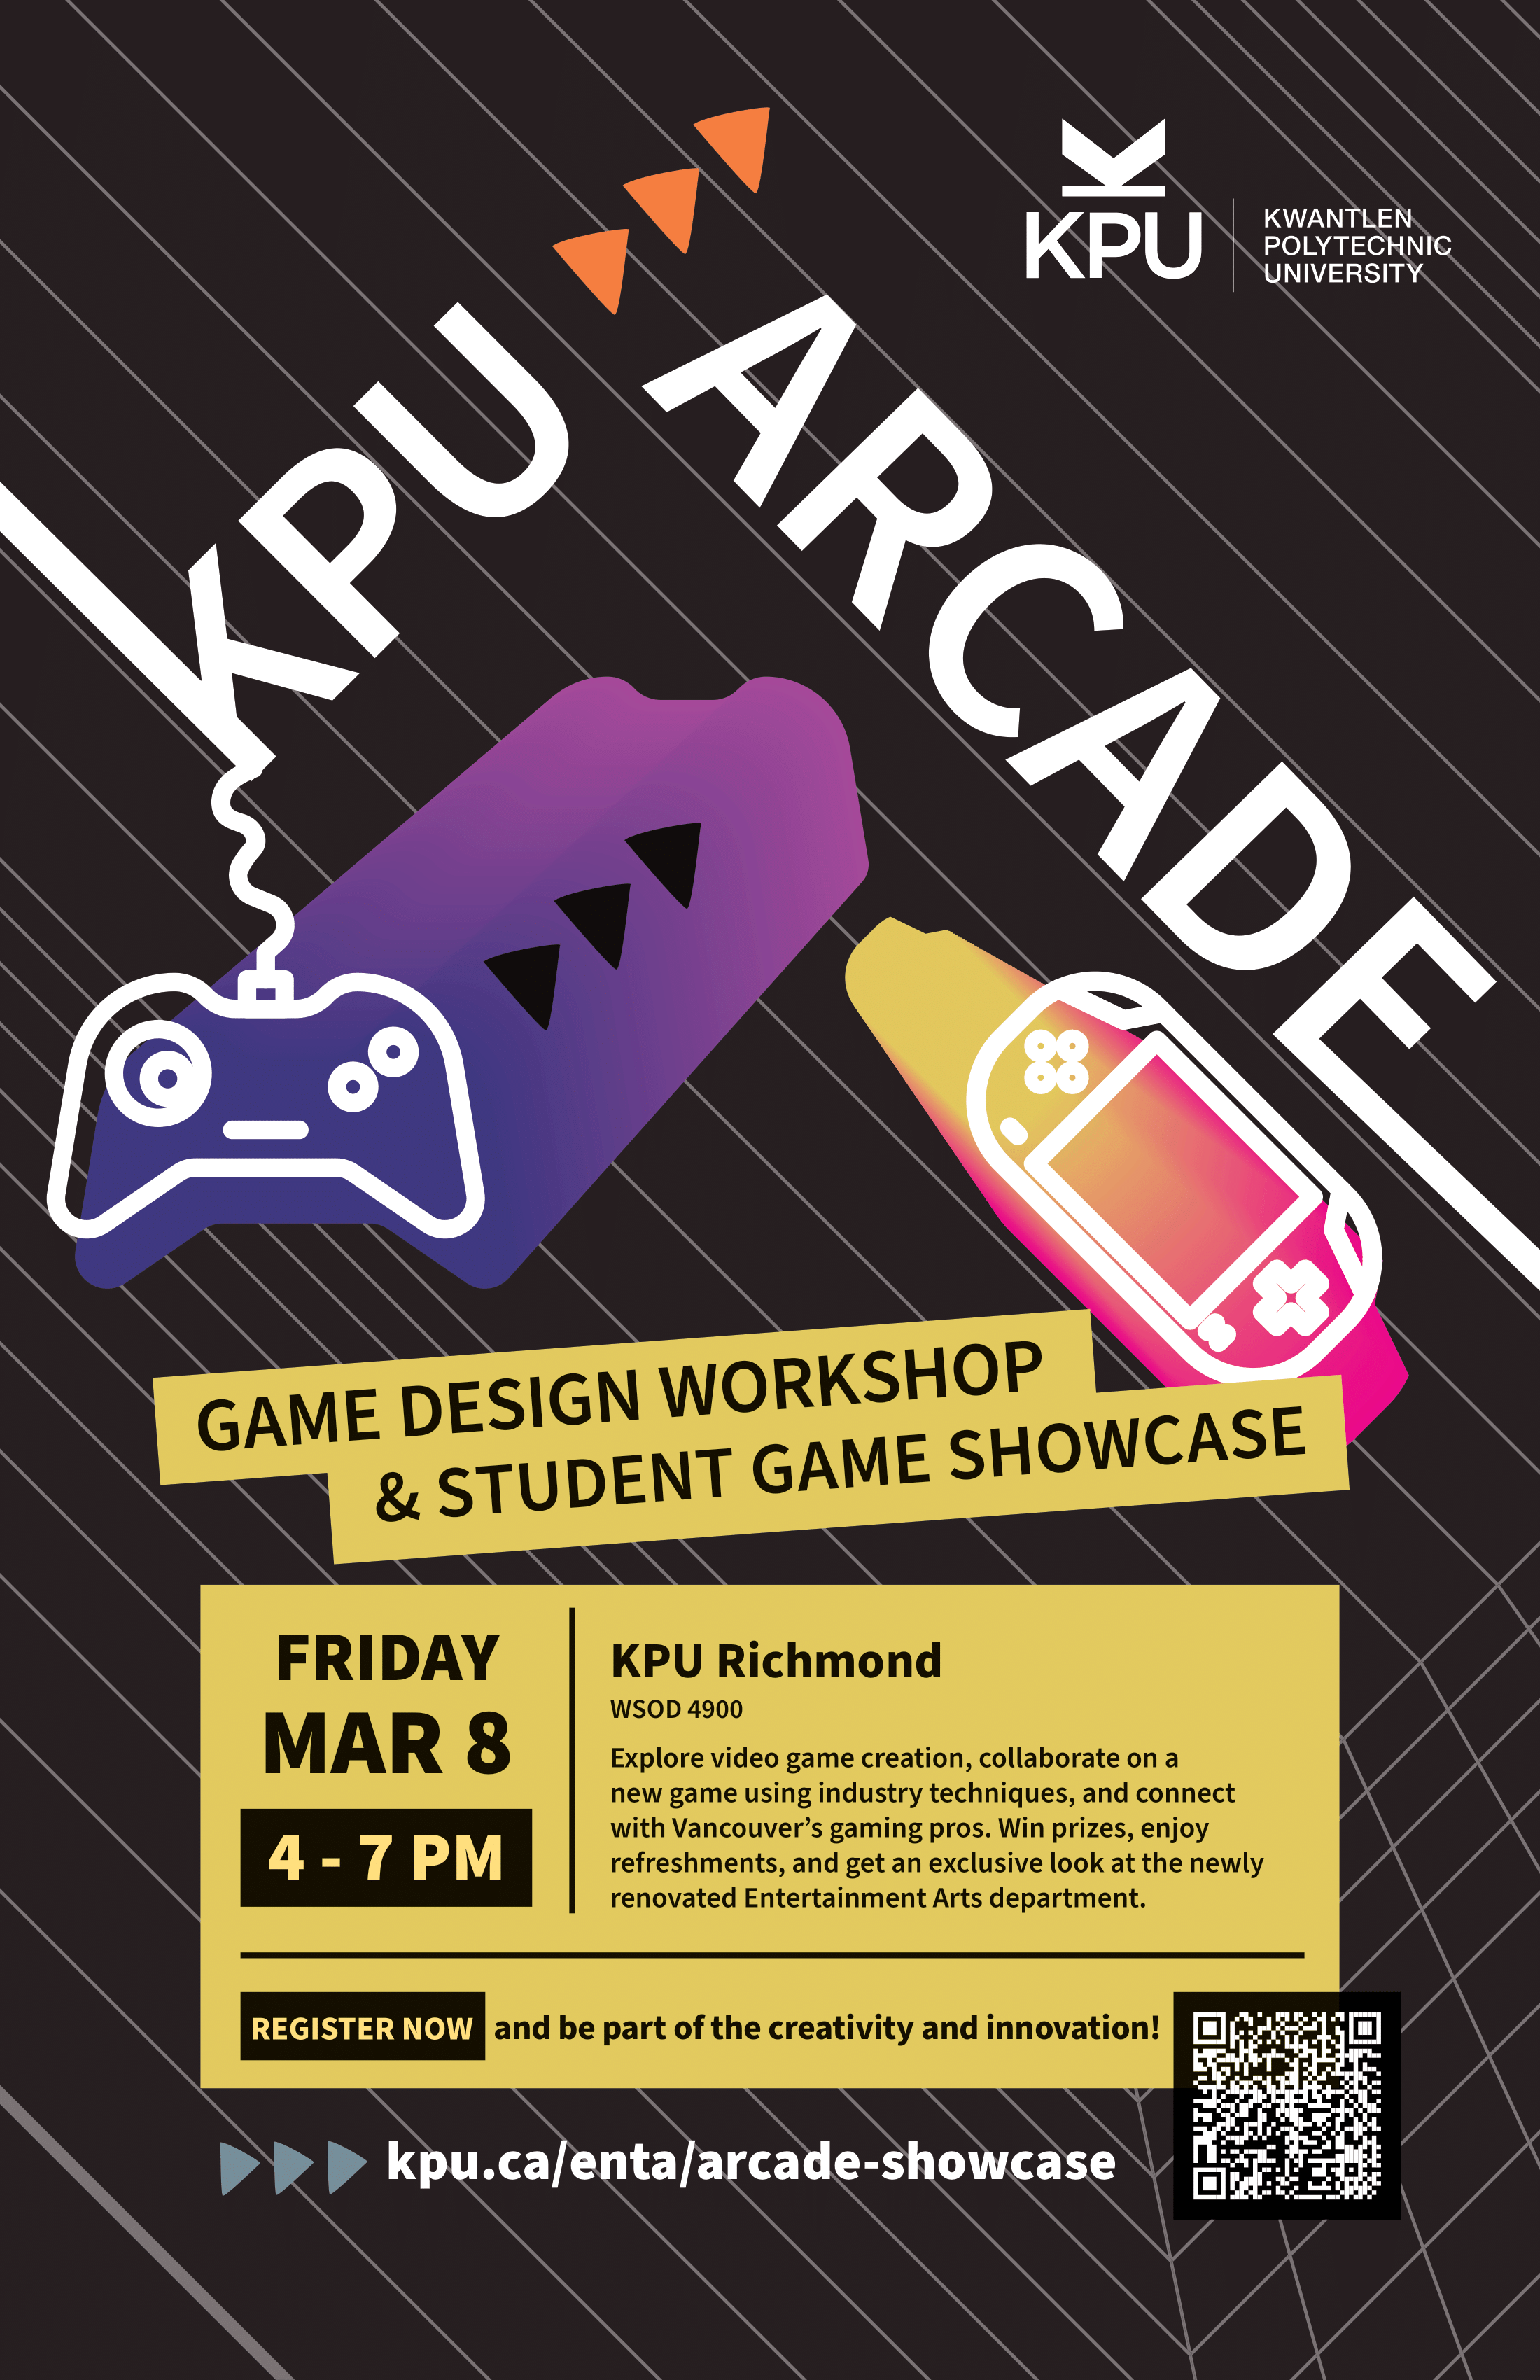 KPU Arcade: Game Design Workshop & Student Game Showcase. Friday, Mar. 8 from 4–7 PM. KPU Richmond, WSD 4900. Register at https://www.kpu.ca/enta/arcade-showcase